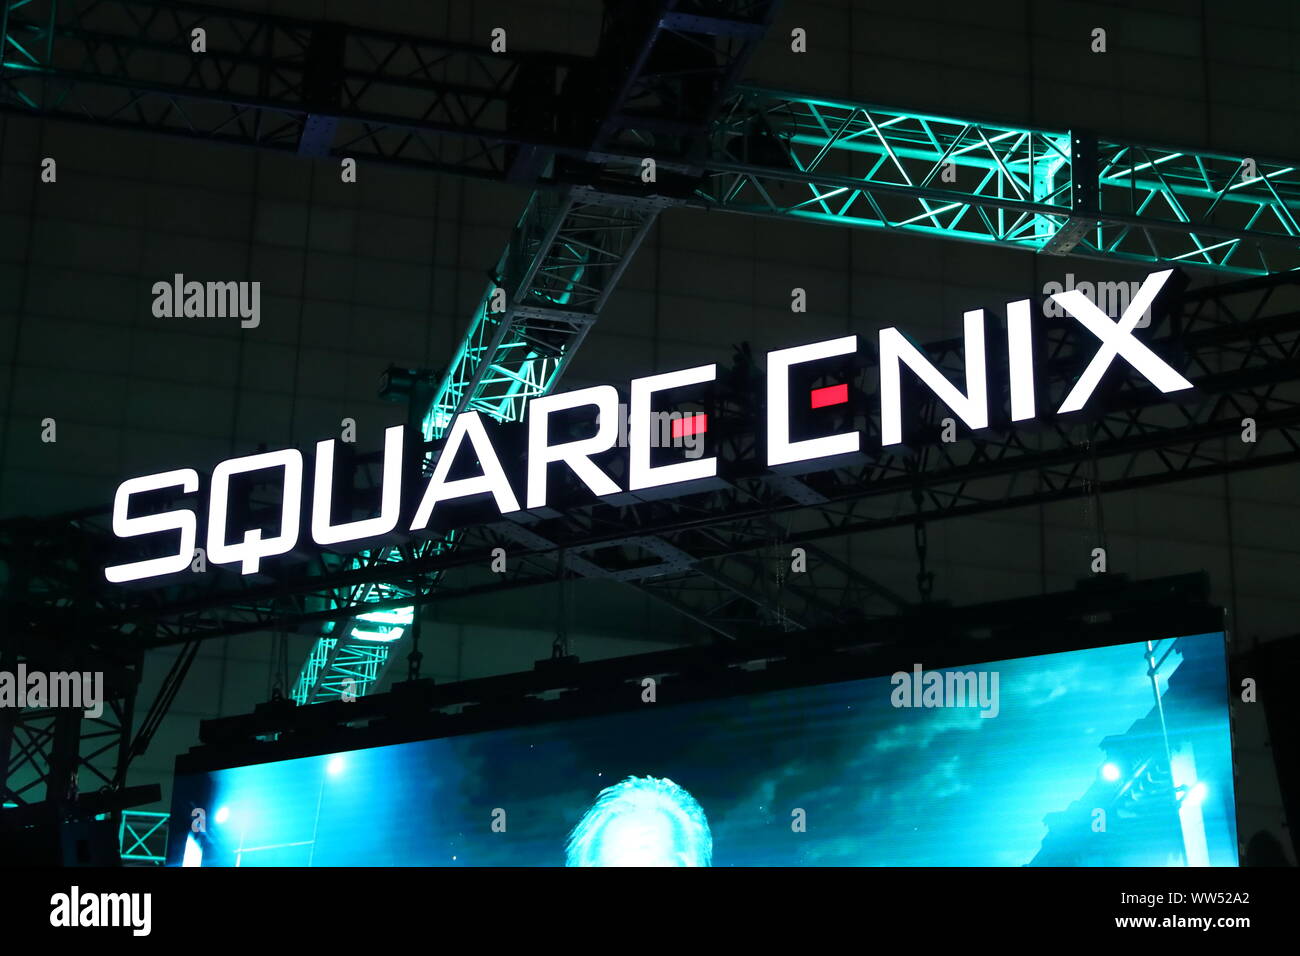 Gamescom 2022: Was Square Enix plant 